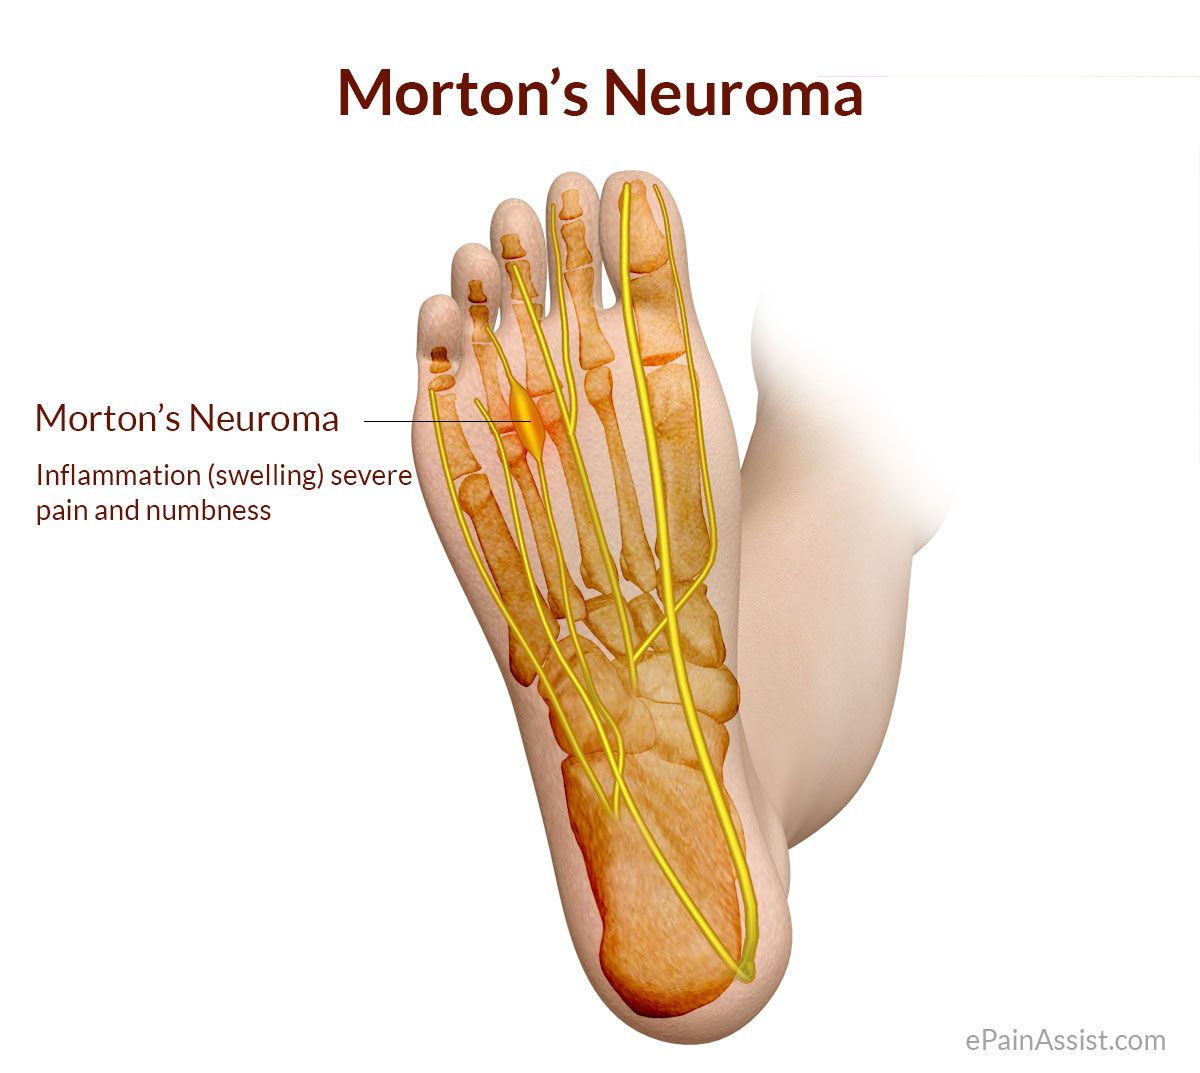 medial plantar nerve entrapment foot problems manual